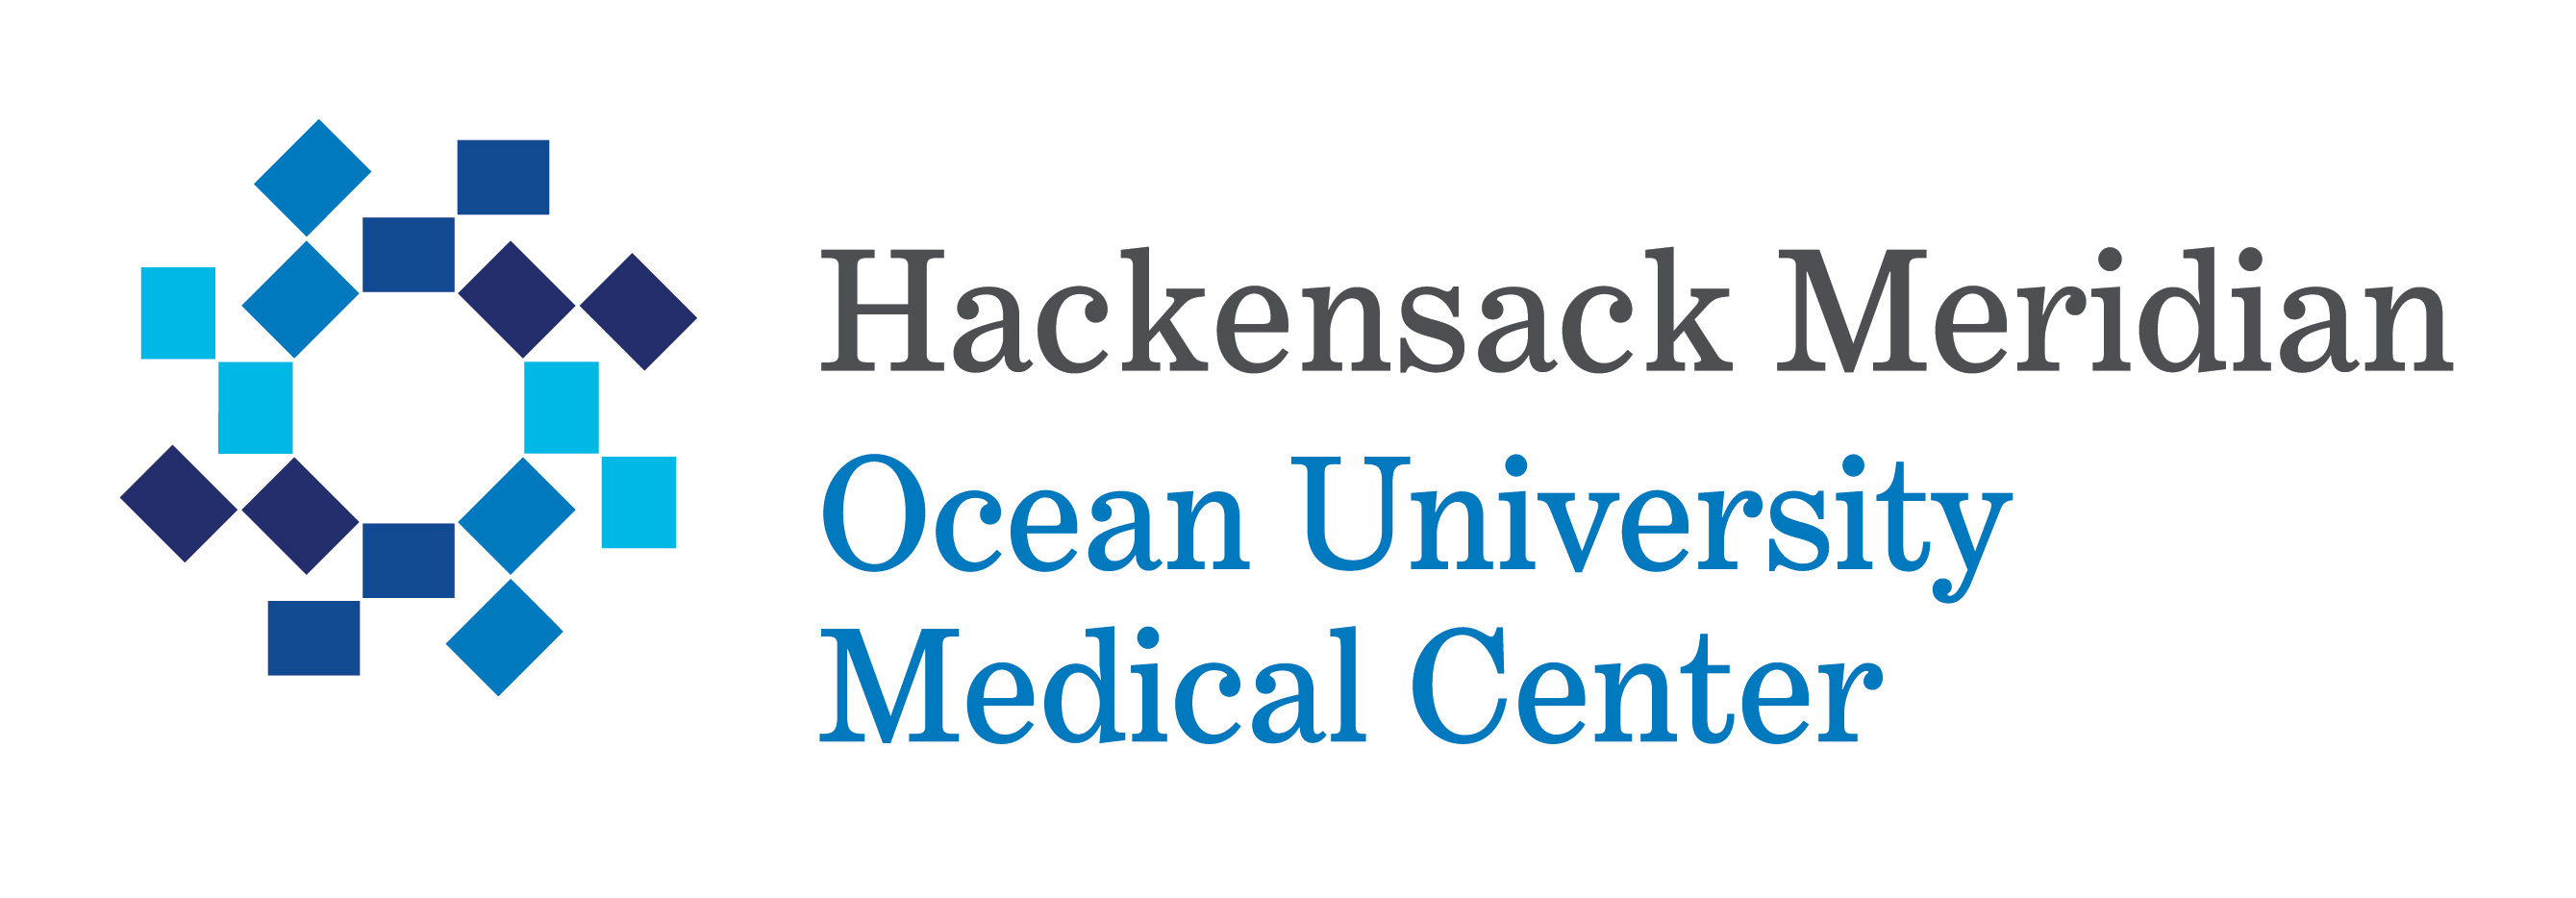 Ocean University Medical Center